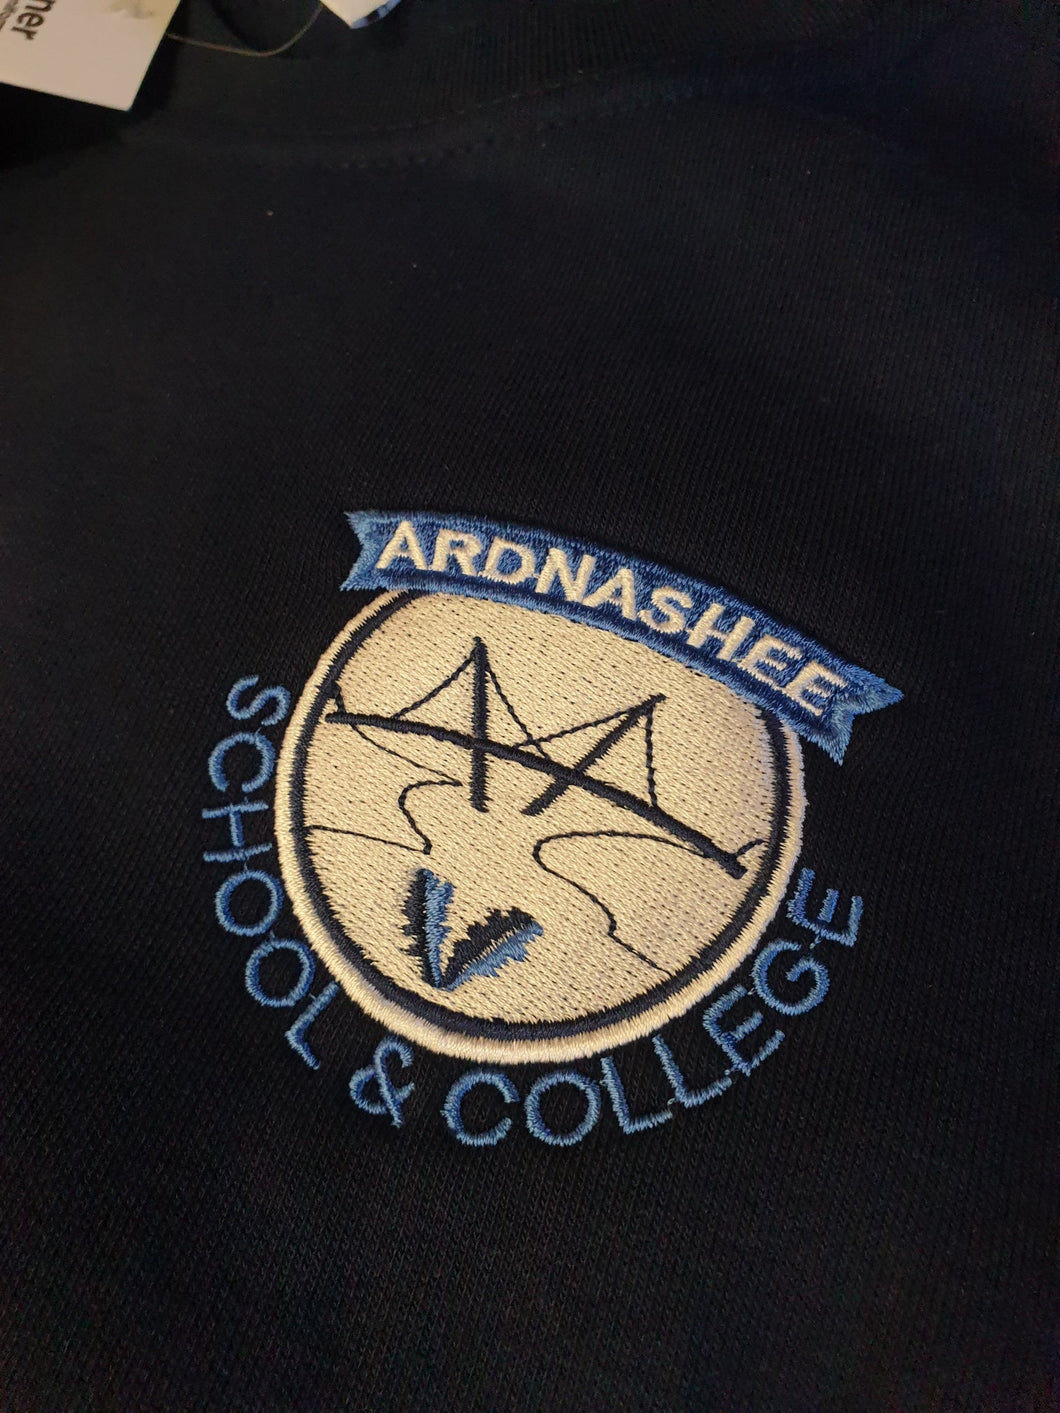 2 x Ardnashee sweatshirt for £29 (SAVE 10%)